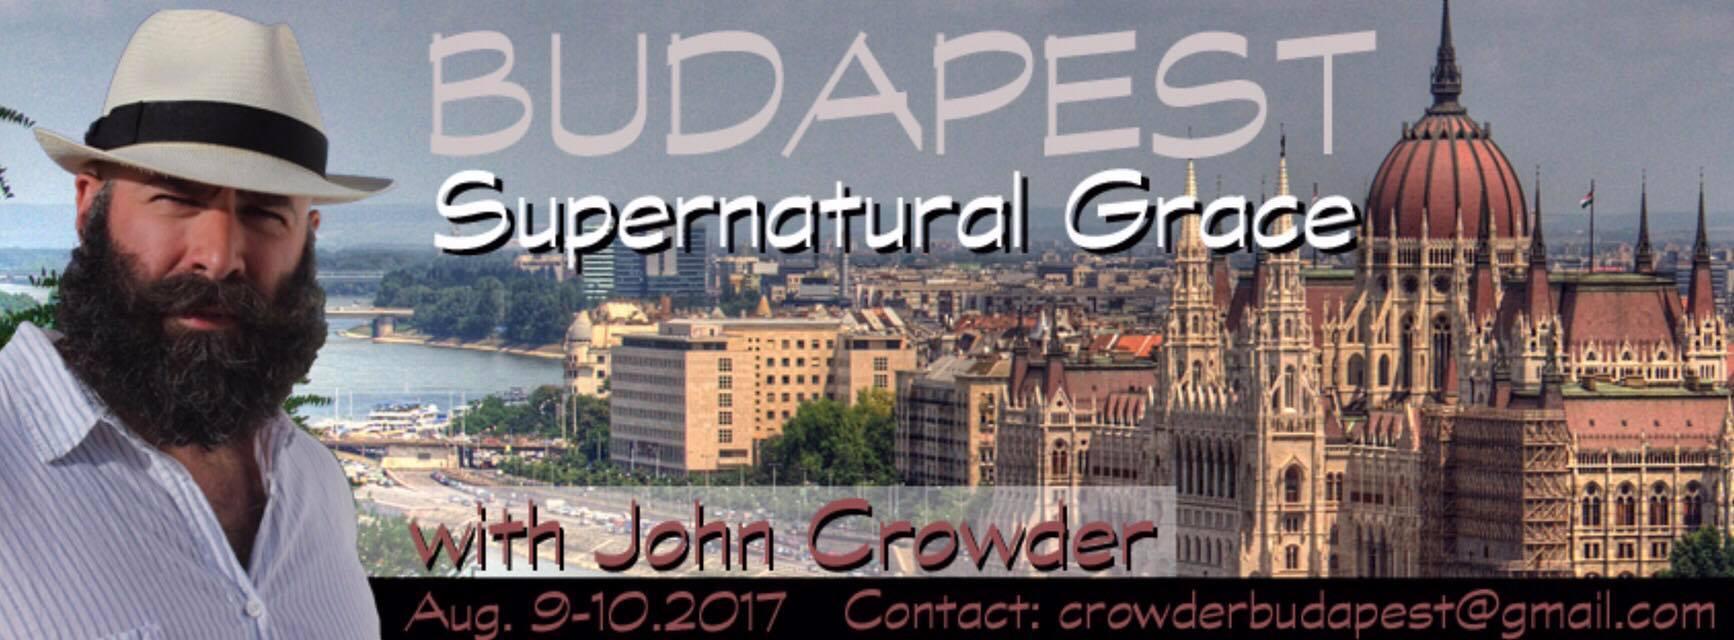 Budapest Supernatural Grace Conference, Frokk-Naphàz, 9 - 10 August